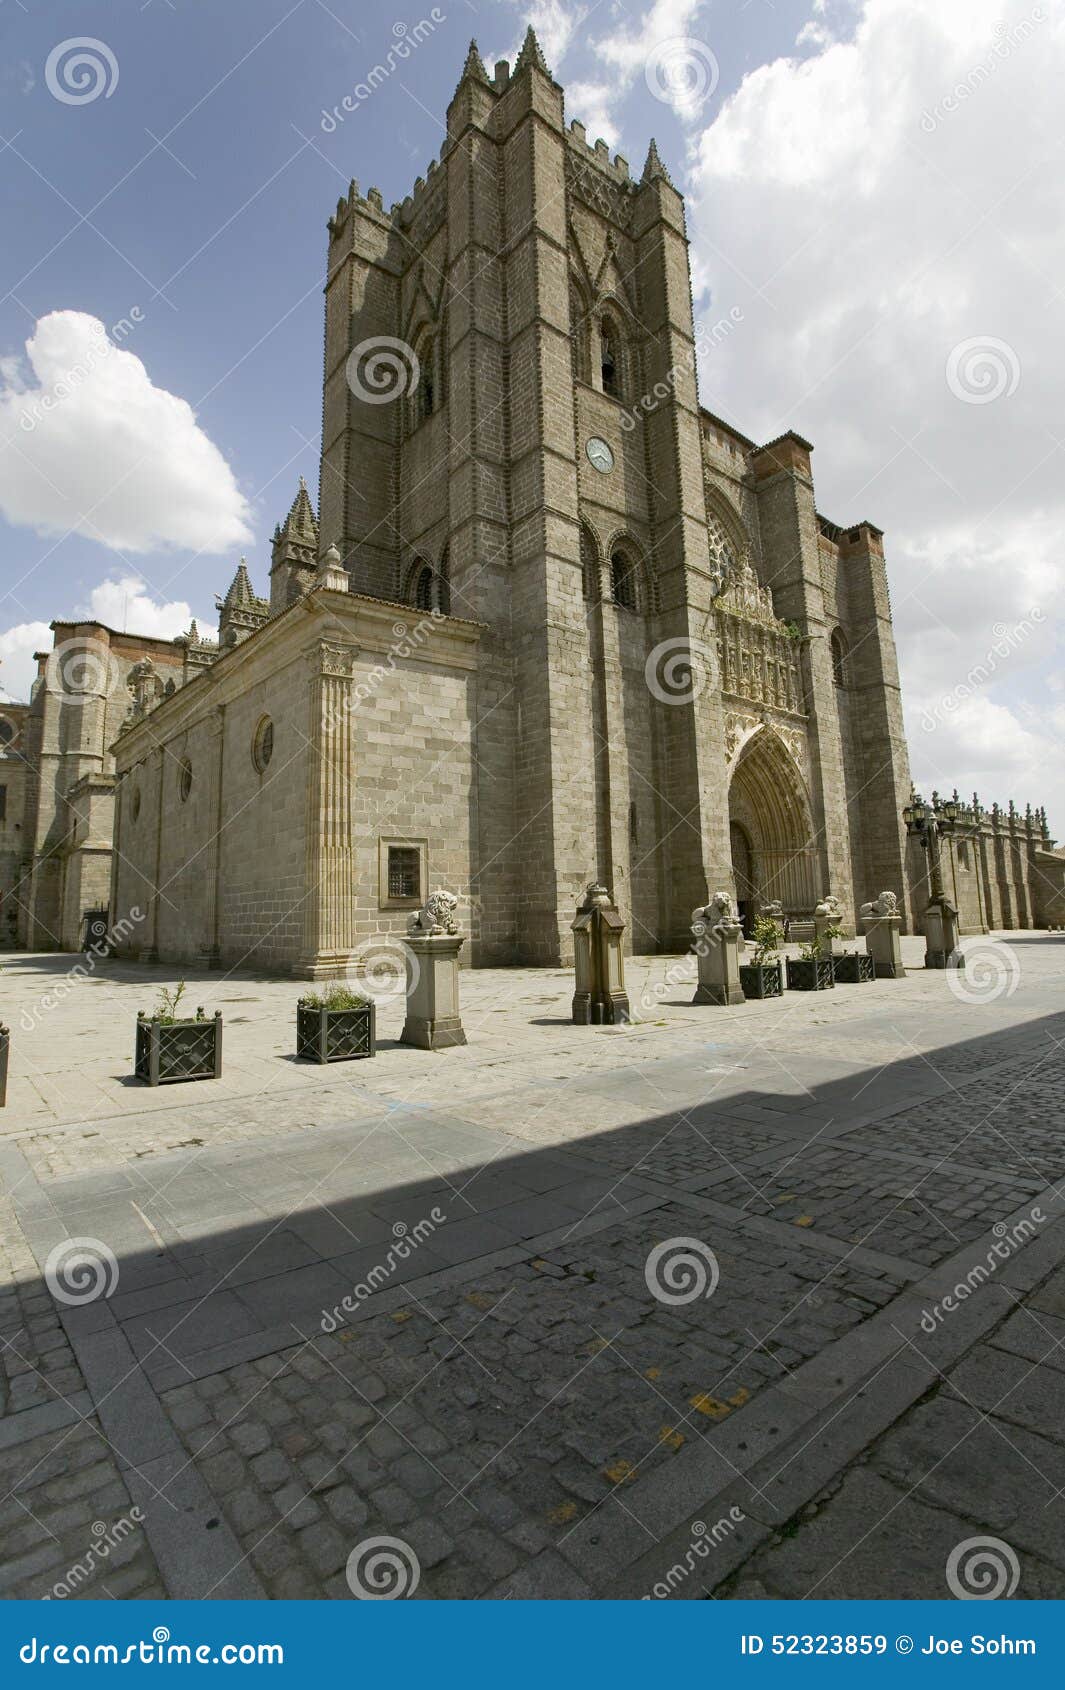 catedral de Ã¯Â¿Â½vila Ã¯Â¿Â½ Ã¯Â¿Â½vila cathedra, cathedral of avila, the oldest gothic church in spain in the old castilian spanish villa